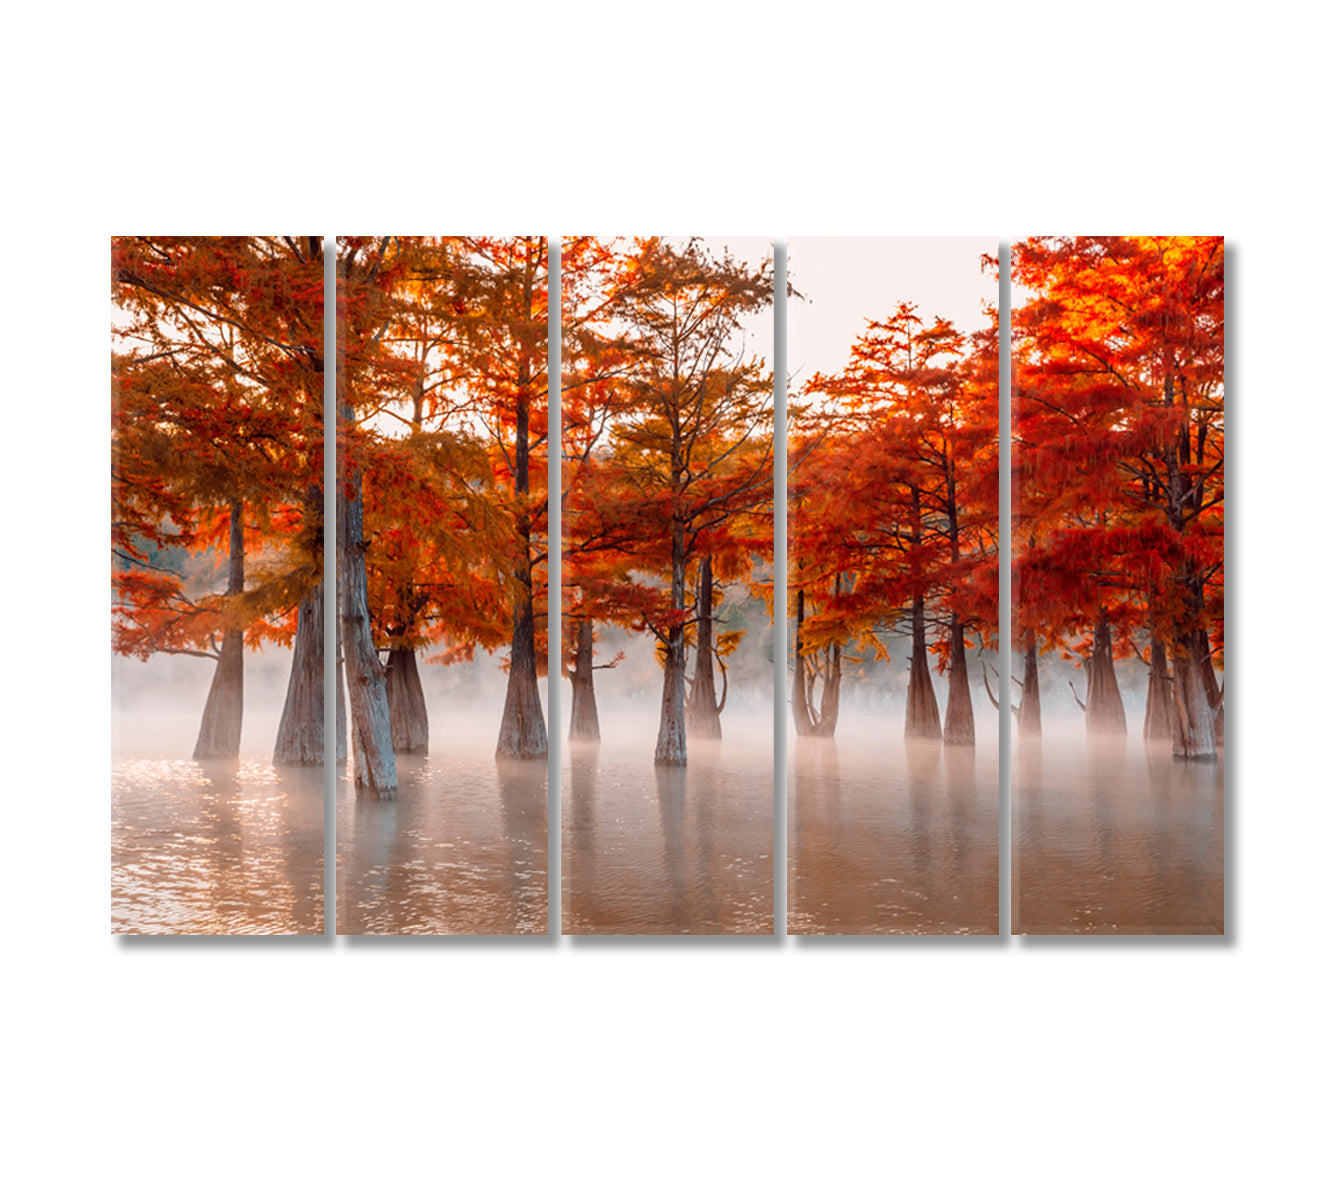 Swamp Cypresses on Lake Canvas Print-Canvas Print-CetArt-5 Panels-36x24 inches-CetArt